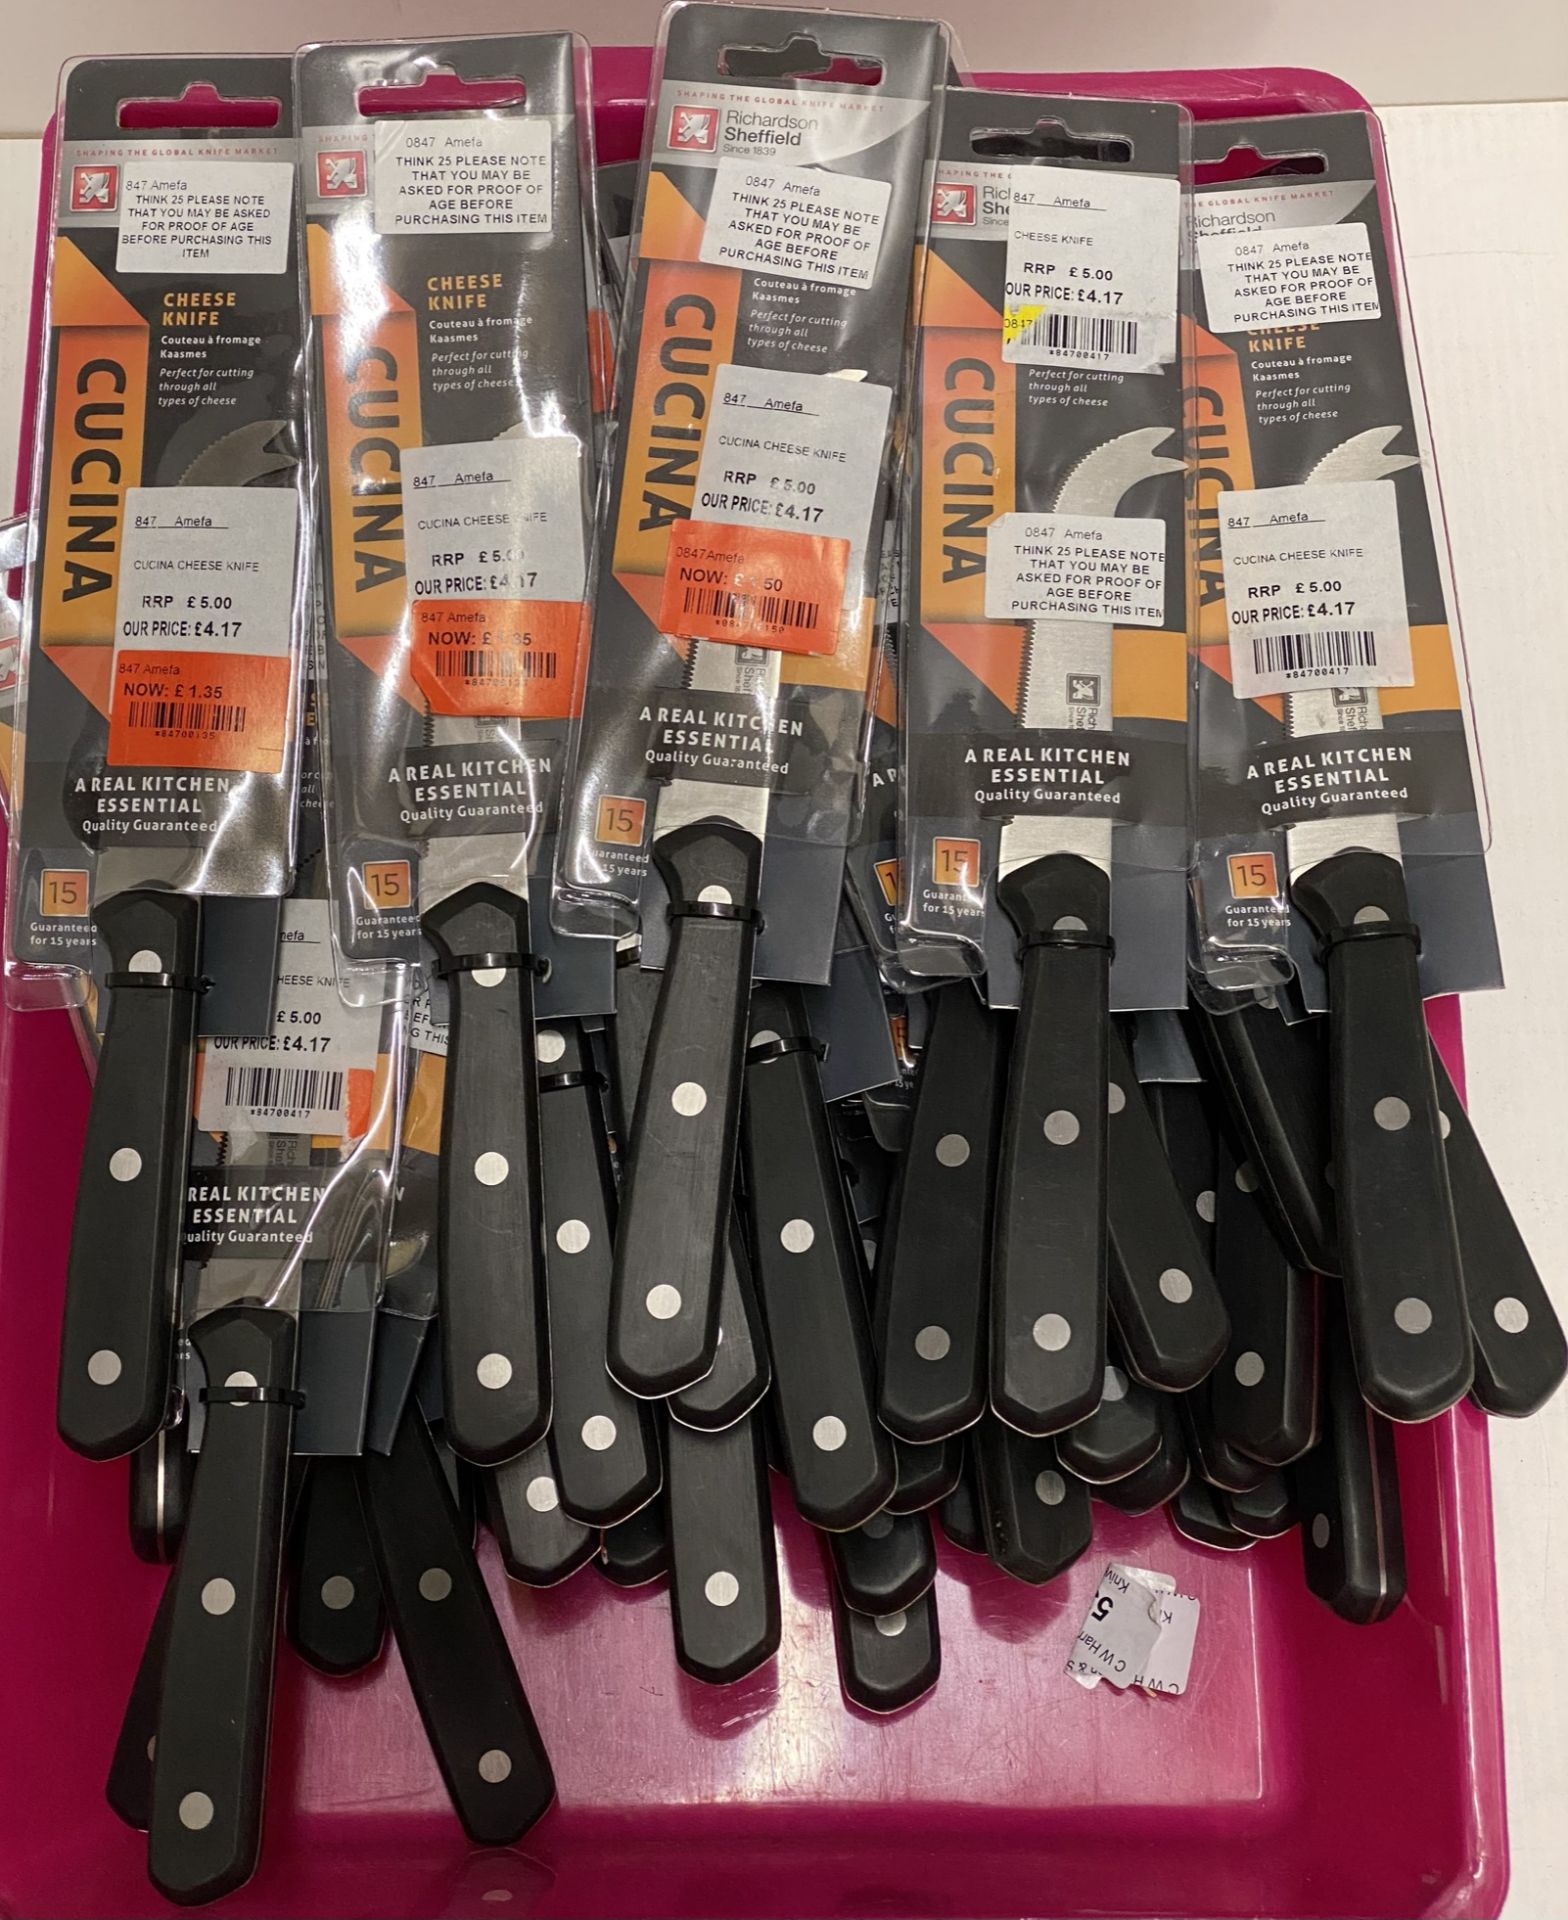 41 x Richardson Sheffield Cucina cheese knives - RRP £5 each